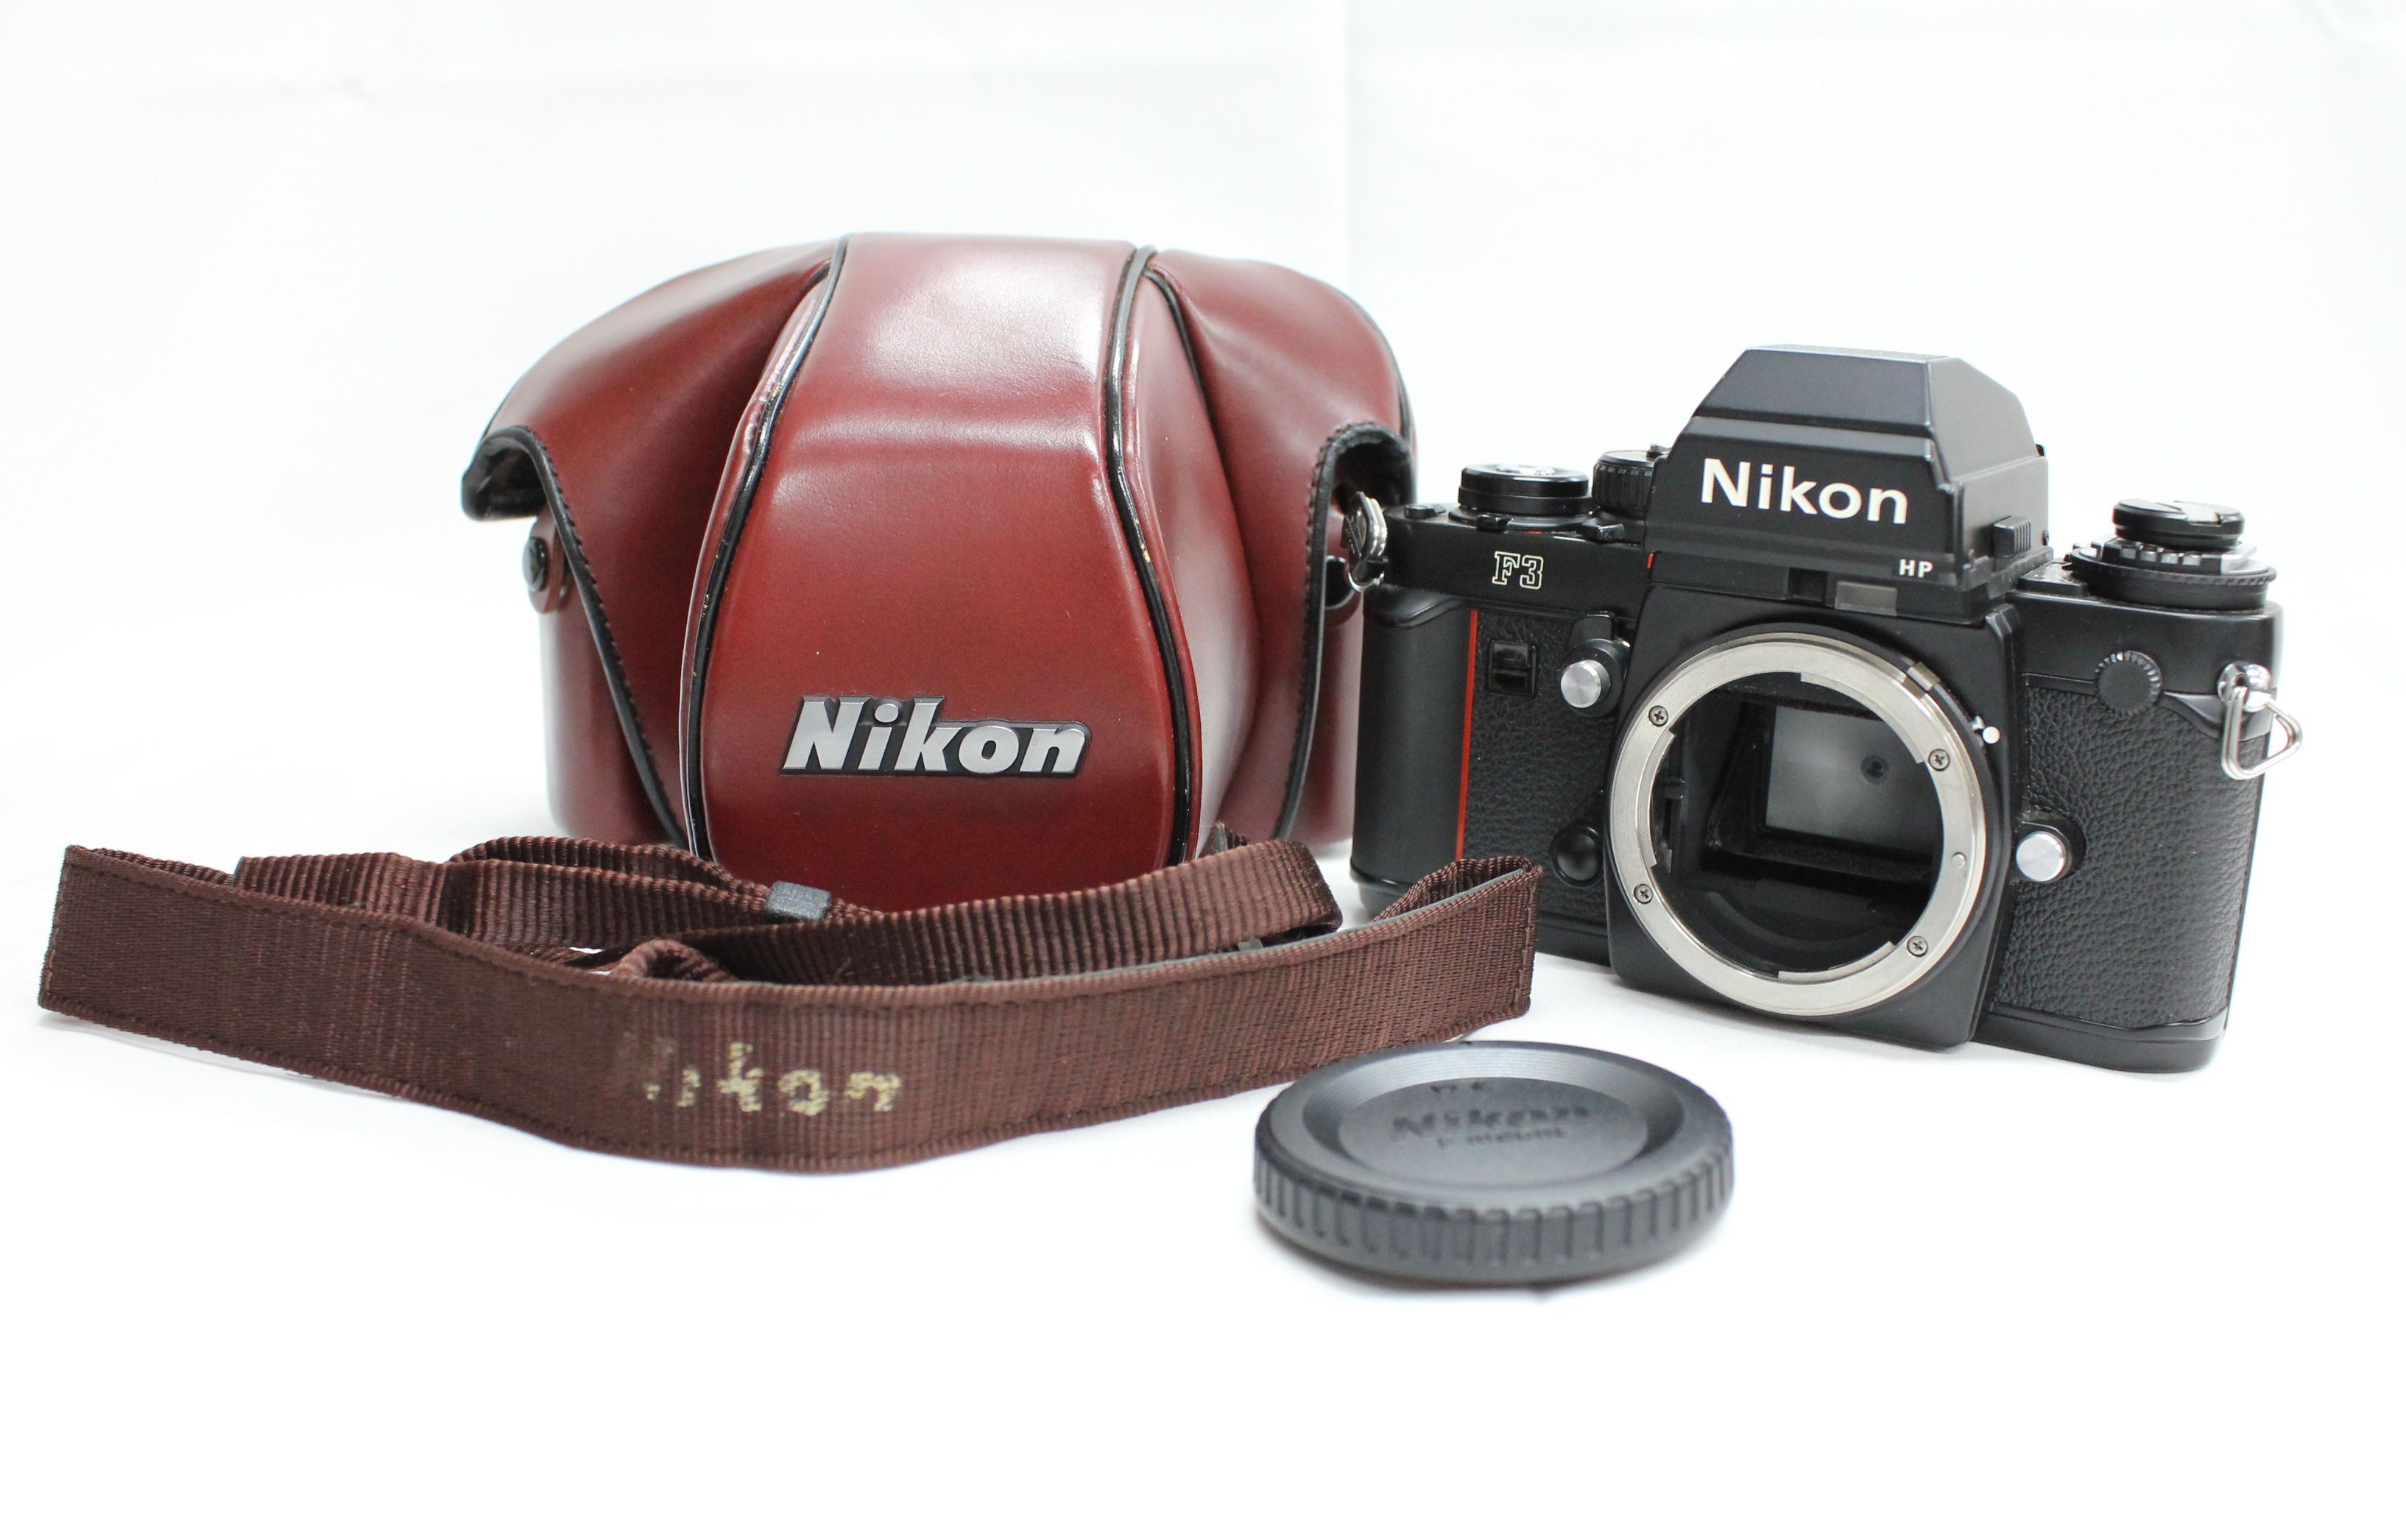 Japan Used Camera Shop | [Near Mint] Nikon F3 HP 35mm SLR Film Camera Body w/ CF-22 Case from Japan